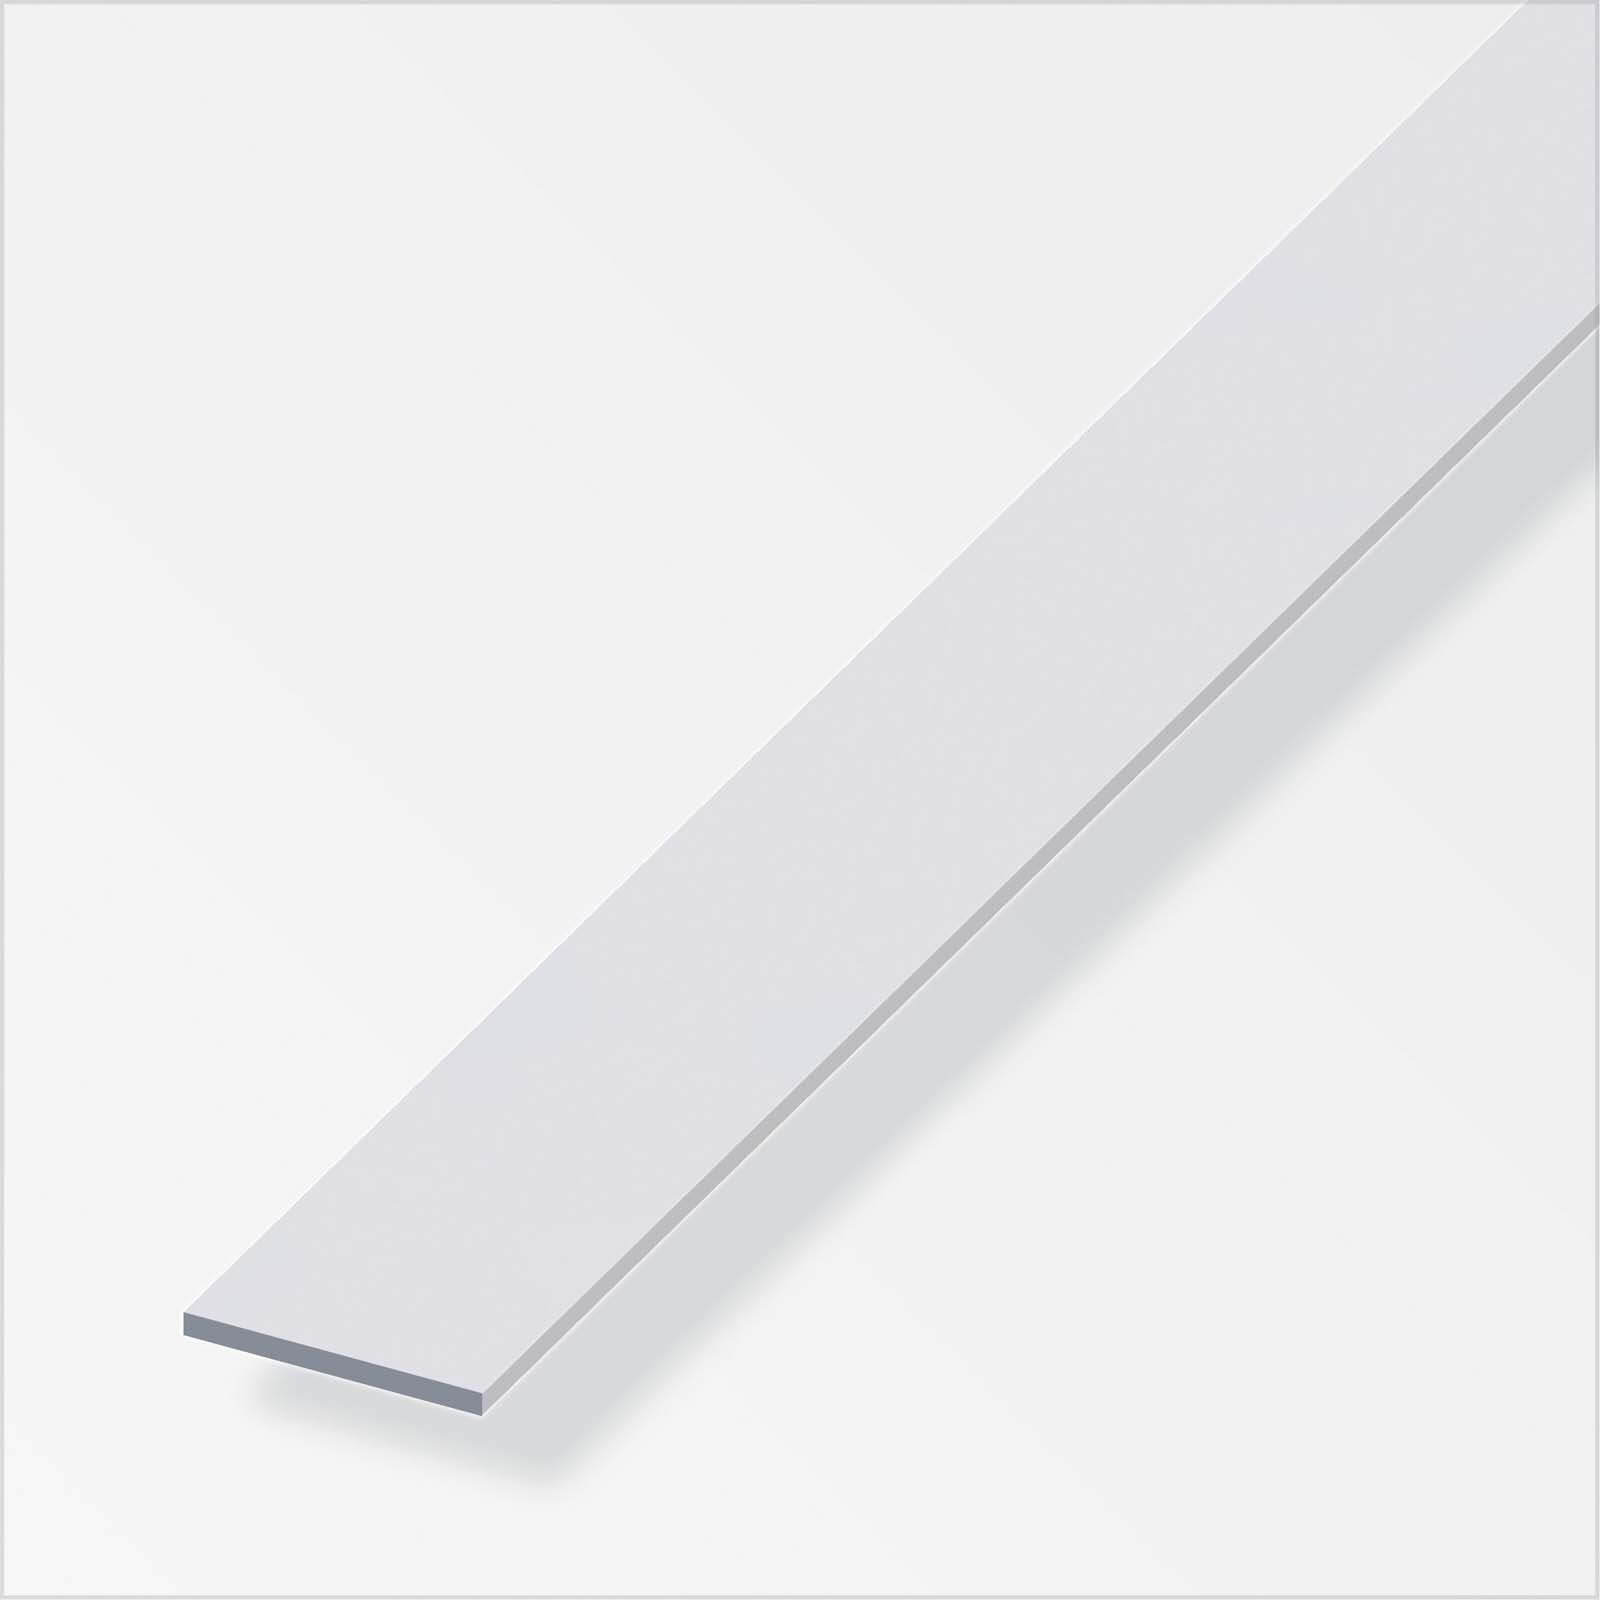 Photo of Anodised Aluminium Flat Bar Profile - 2m X 25mm